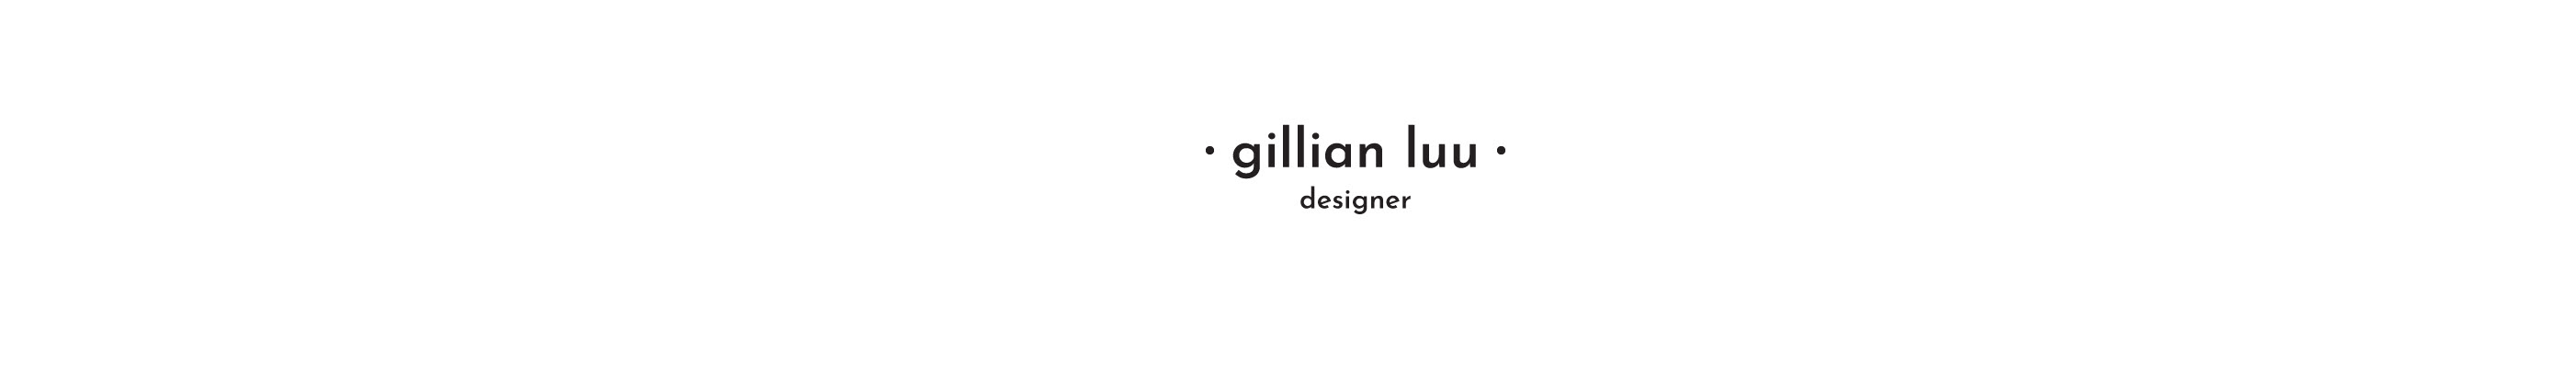 Profielbanner van Gillian Luu